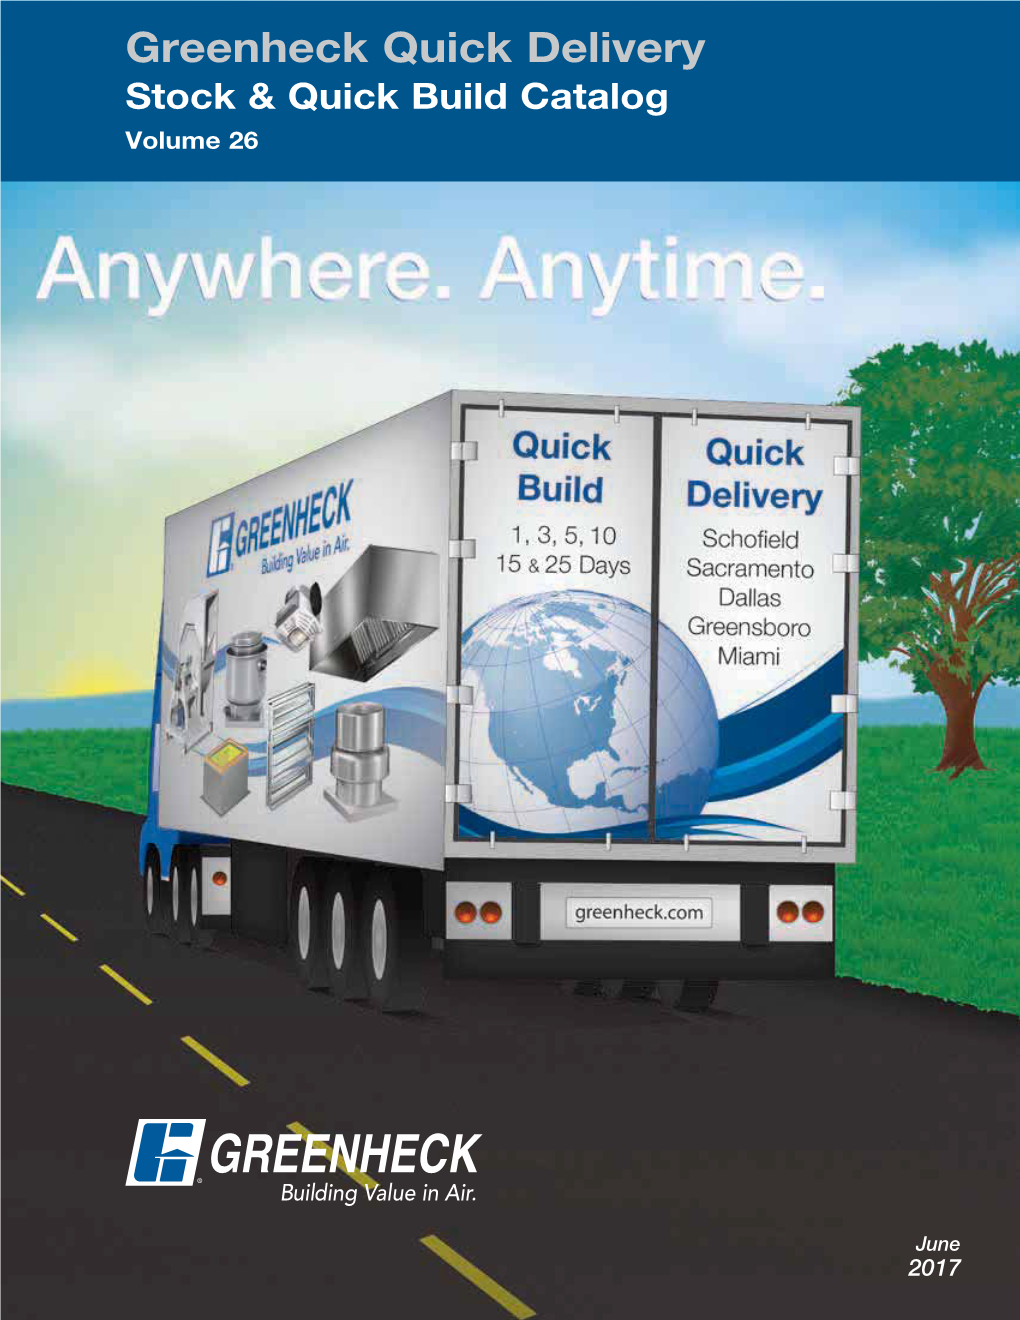 Greenheck Quick Delivery Stock & Quick Build Catalog Volume 26